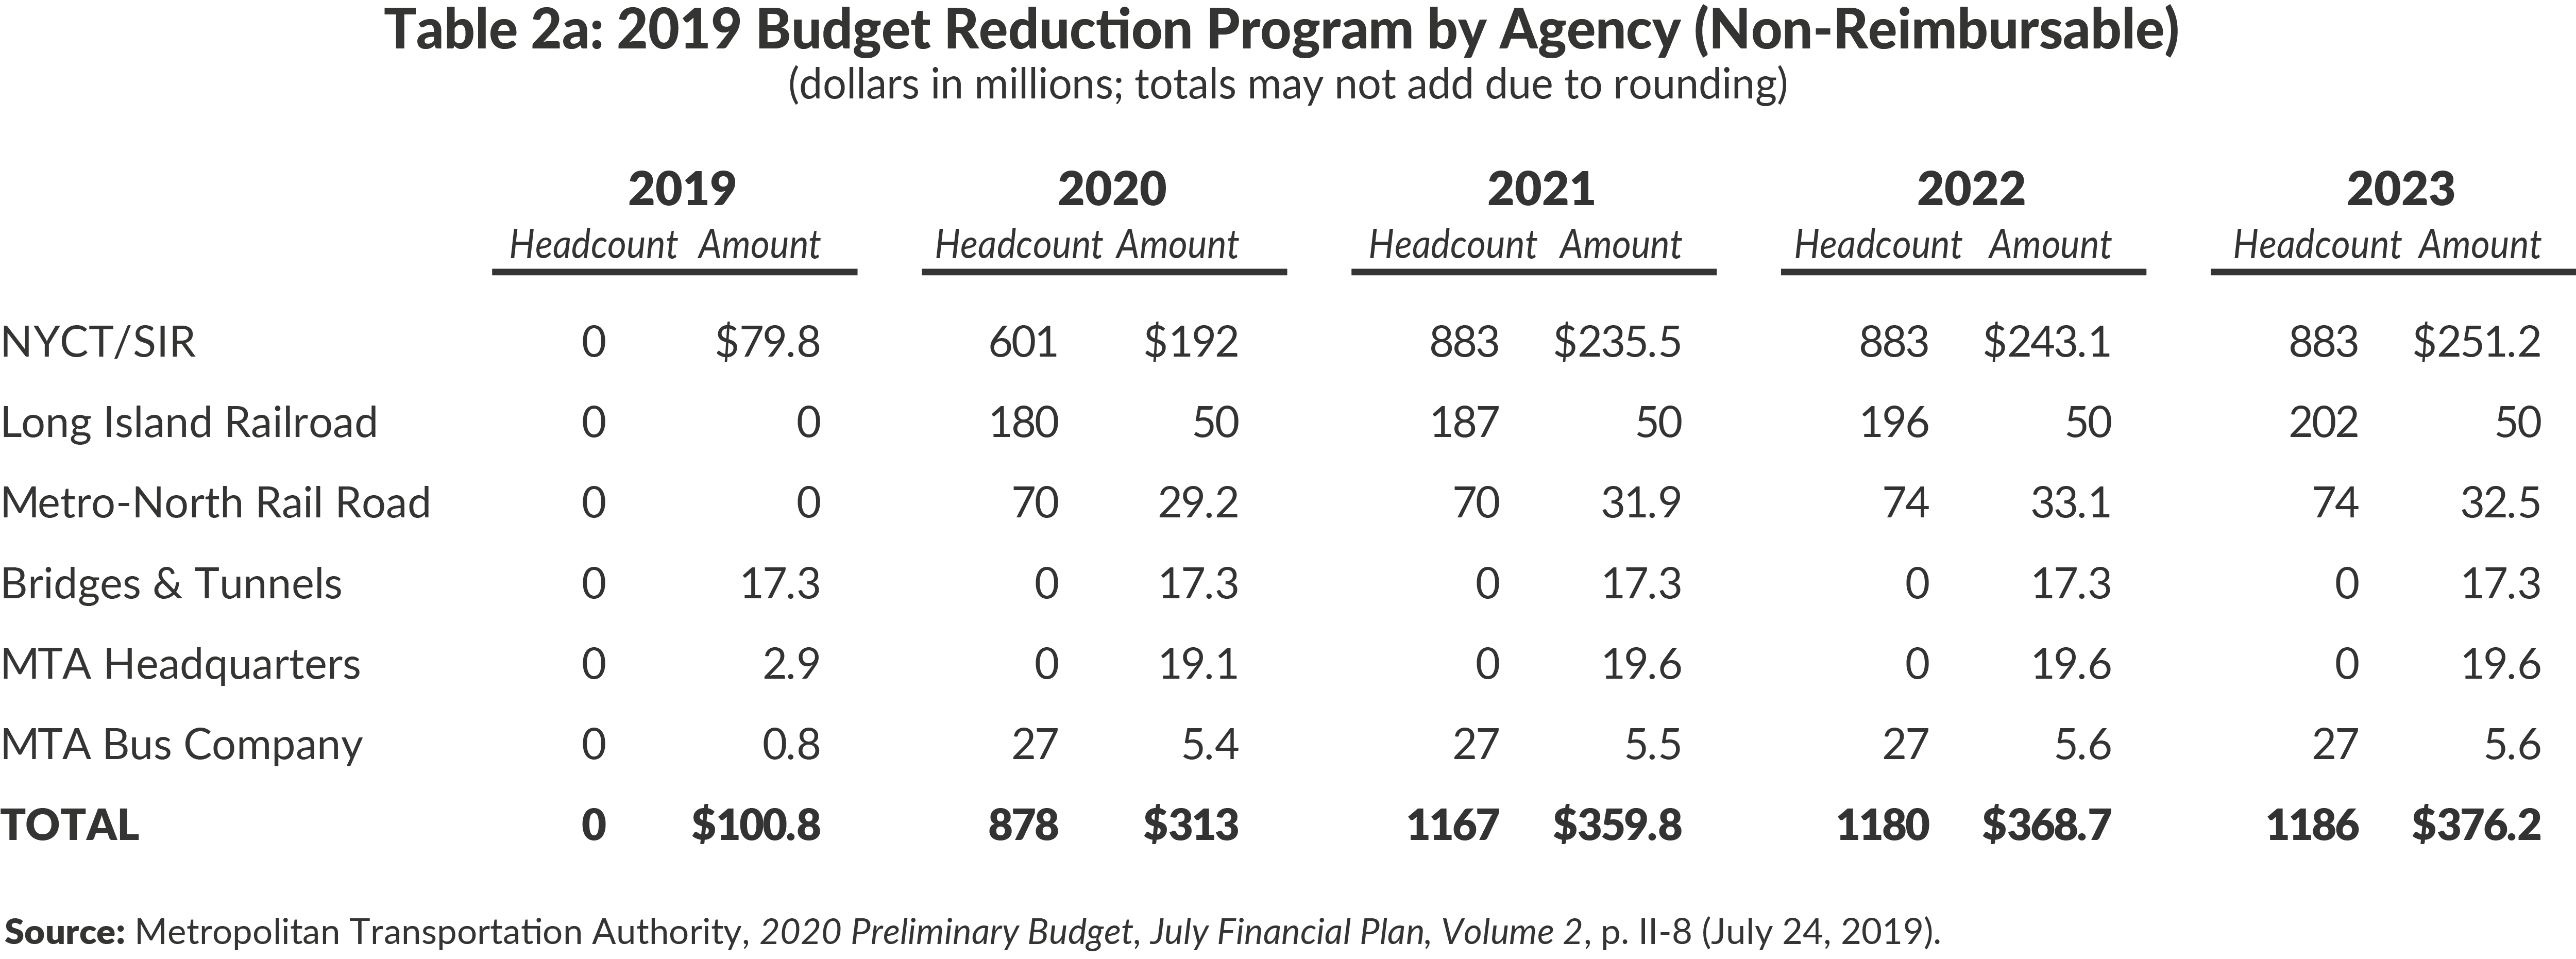 Table 2a: 2019 Budget Reduction Program by Agency (Non-Reimbursable) 